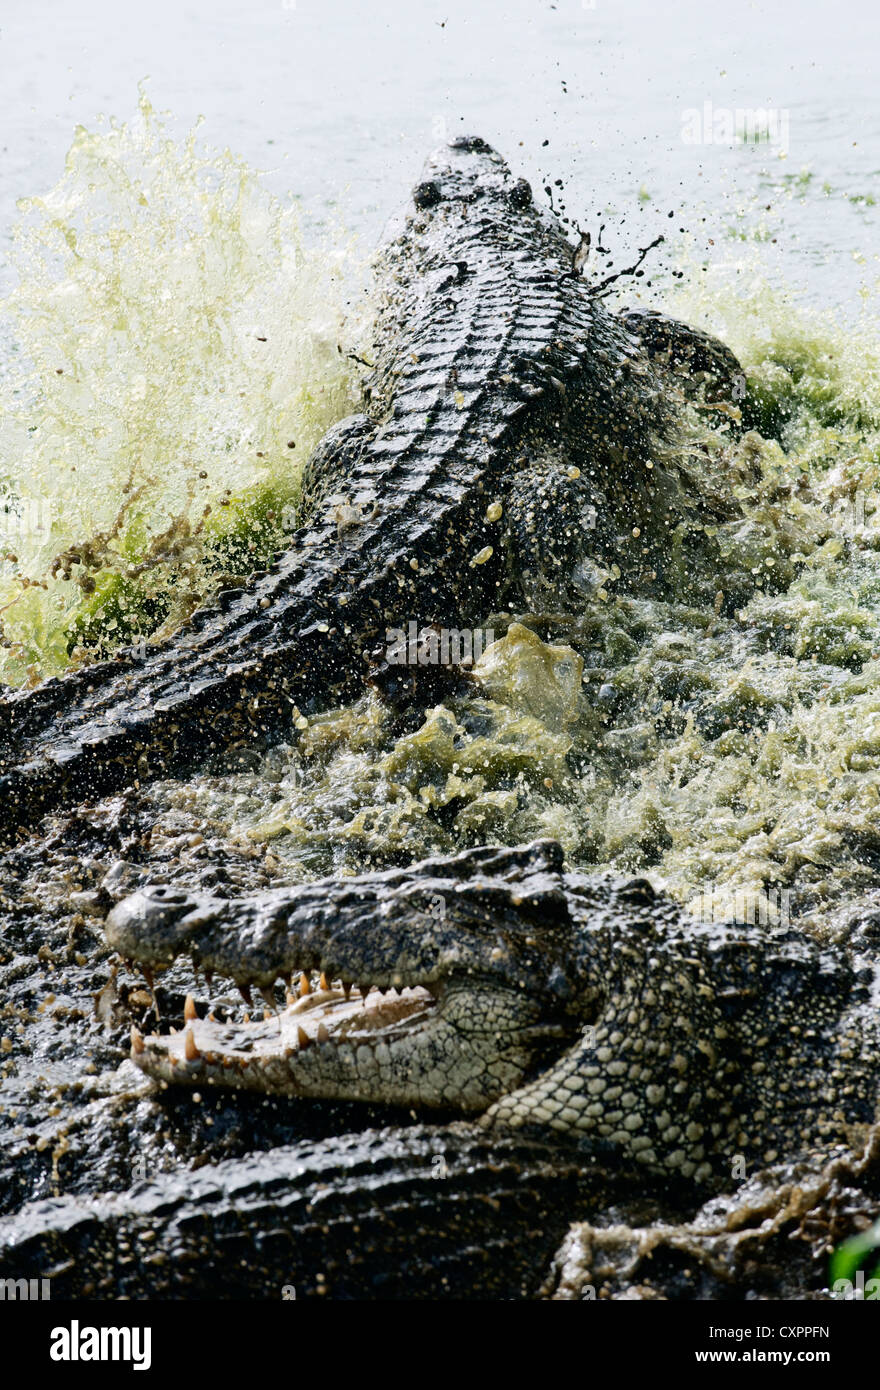 Fighting crocodiles. Stock Photo